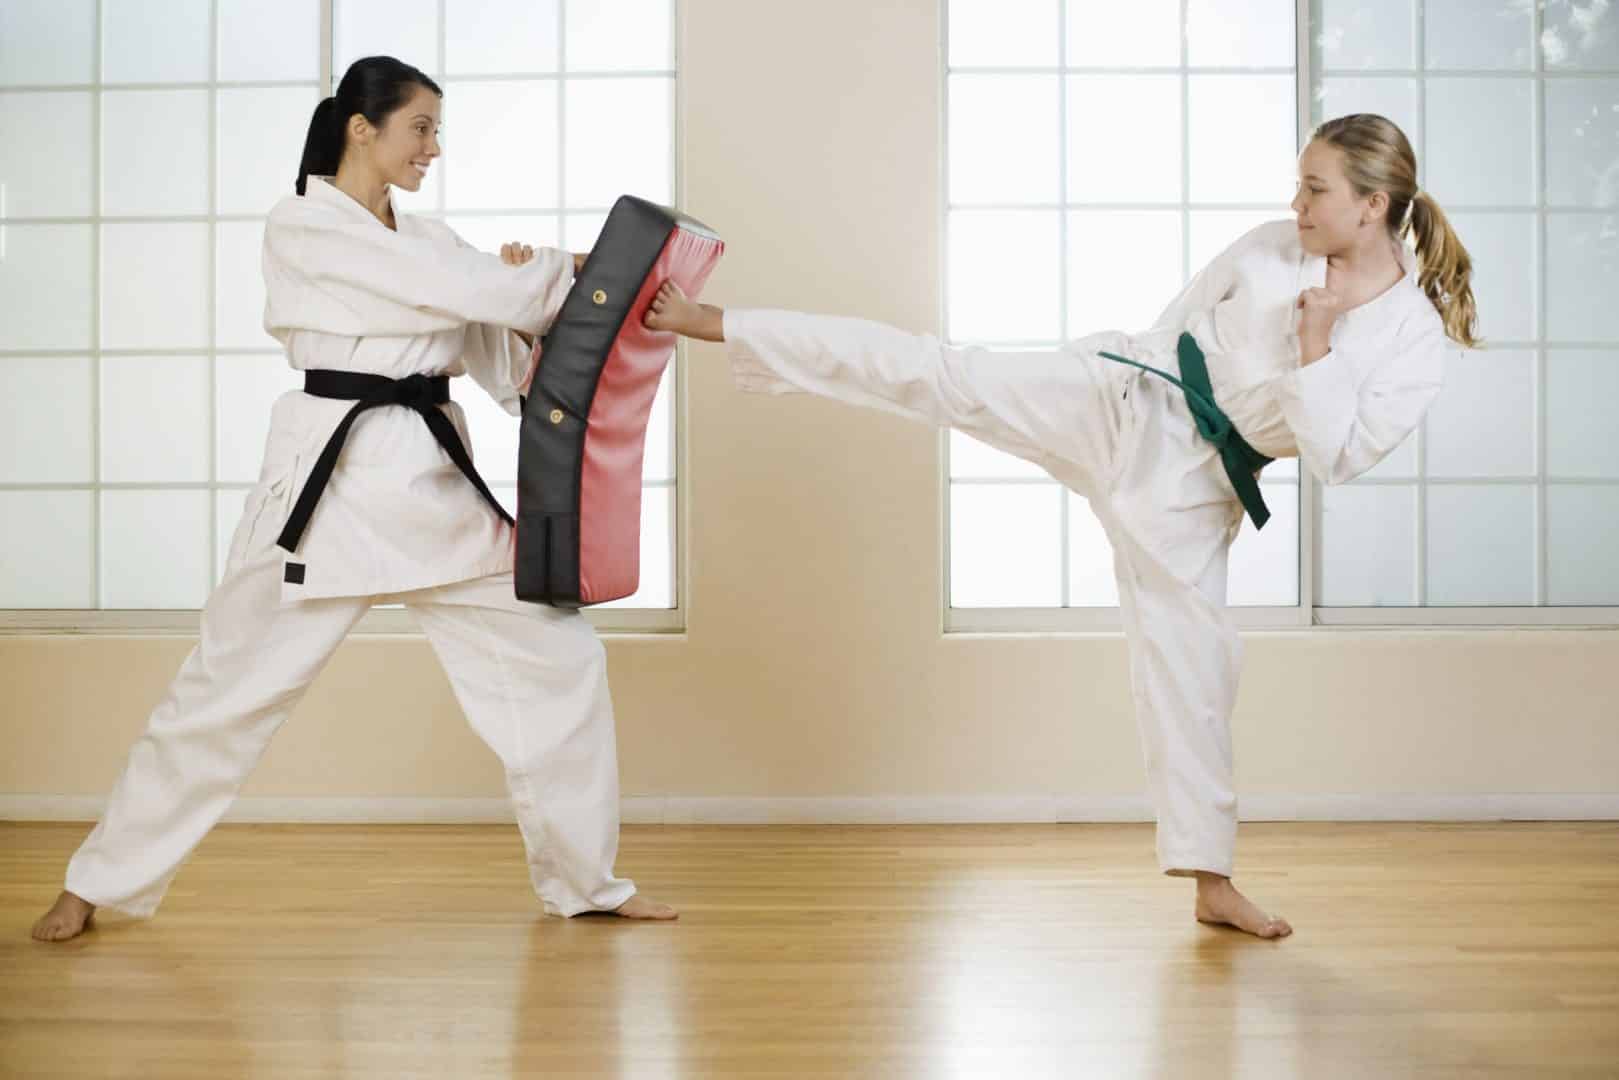 Martial Arts instructor